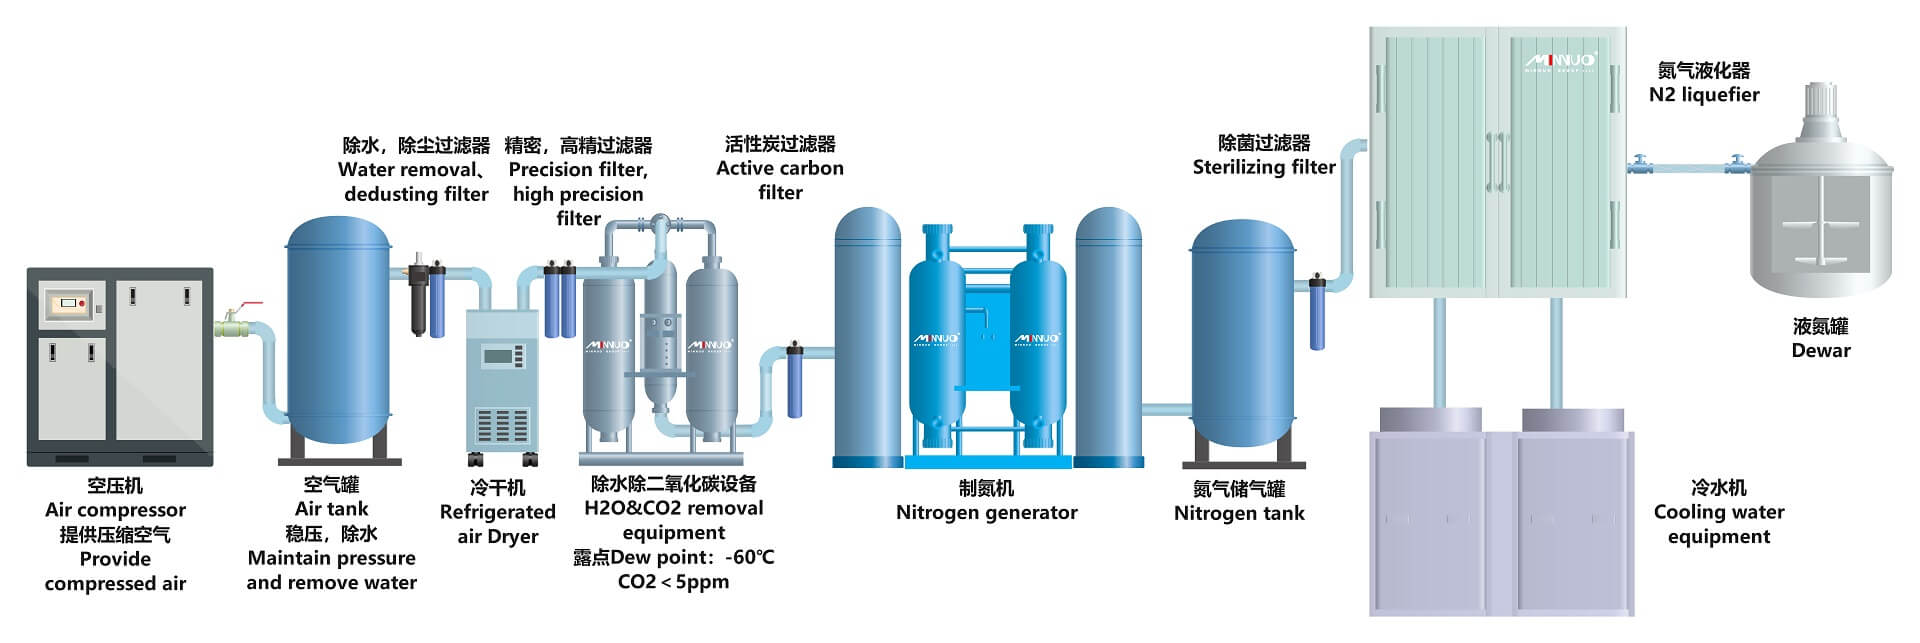 nitrogen generator components